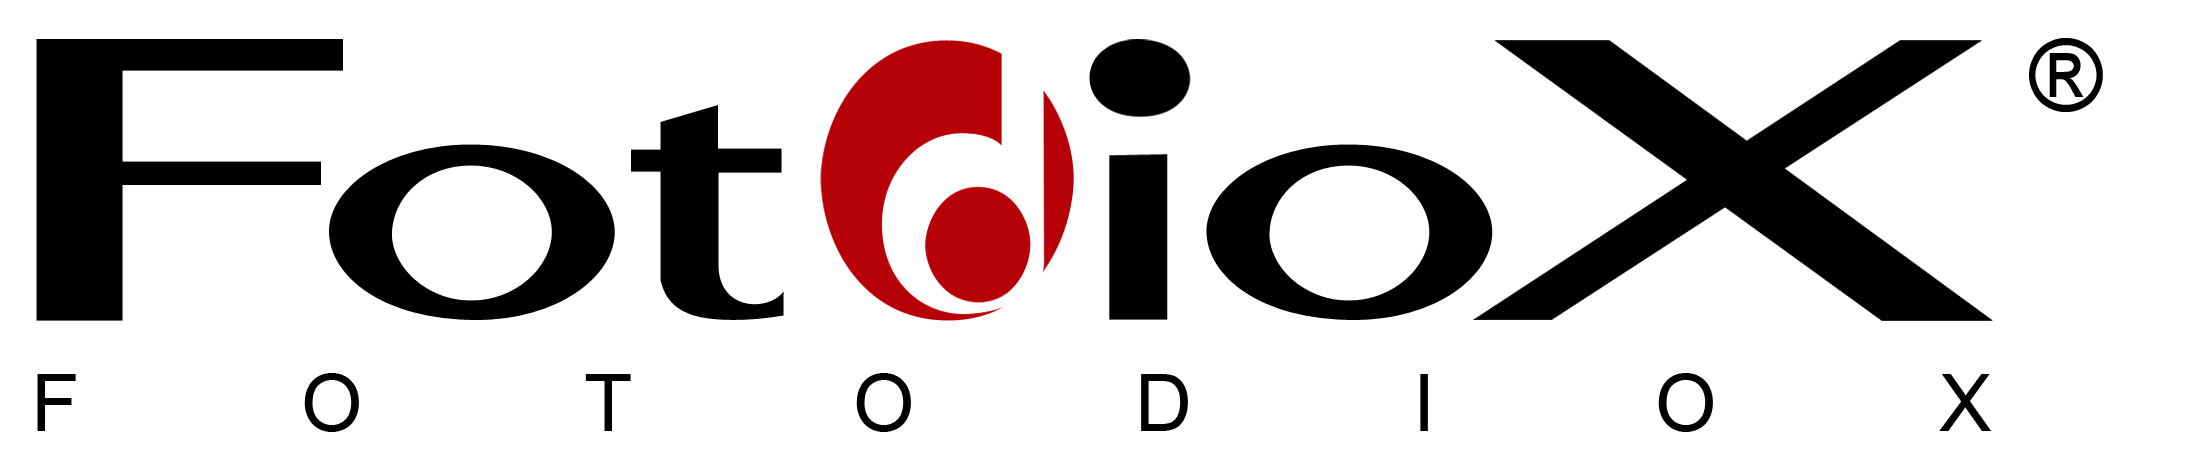 Fotodiox Knowledge Base logo